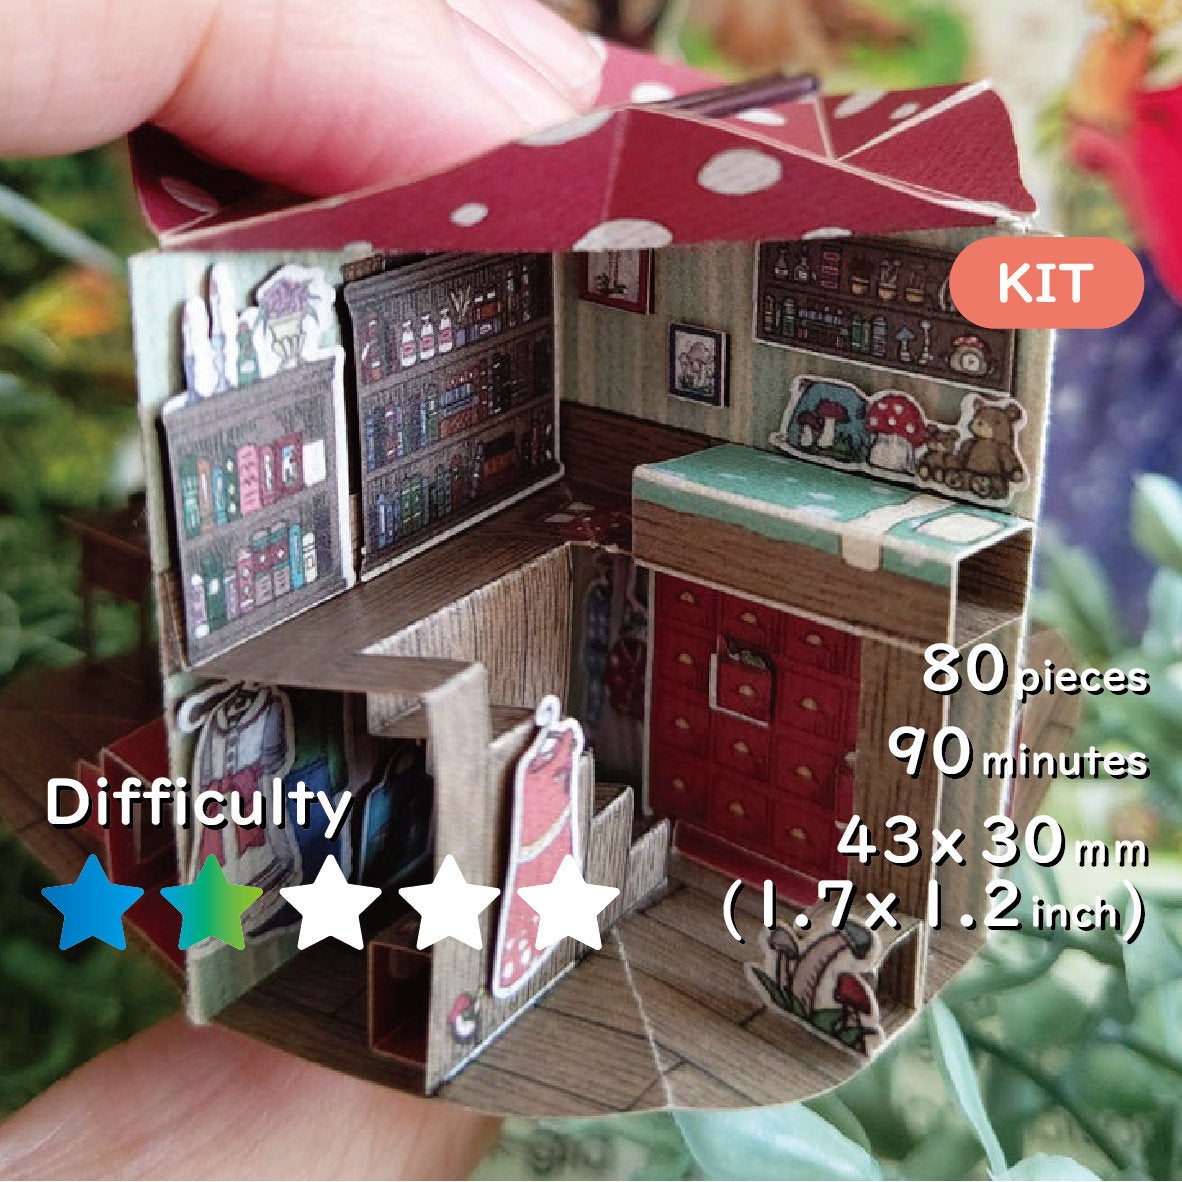 MUSHROOM HOUSE Kinoko House – miniature POP-UP book